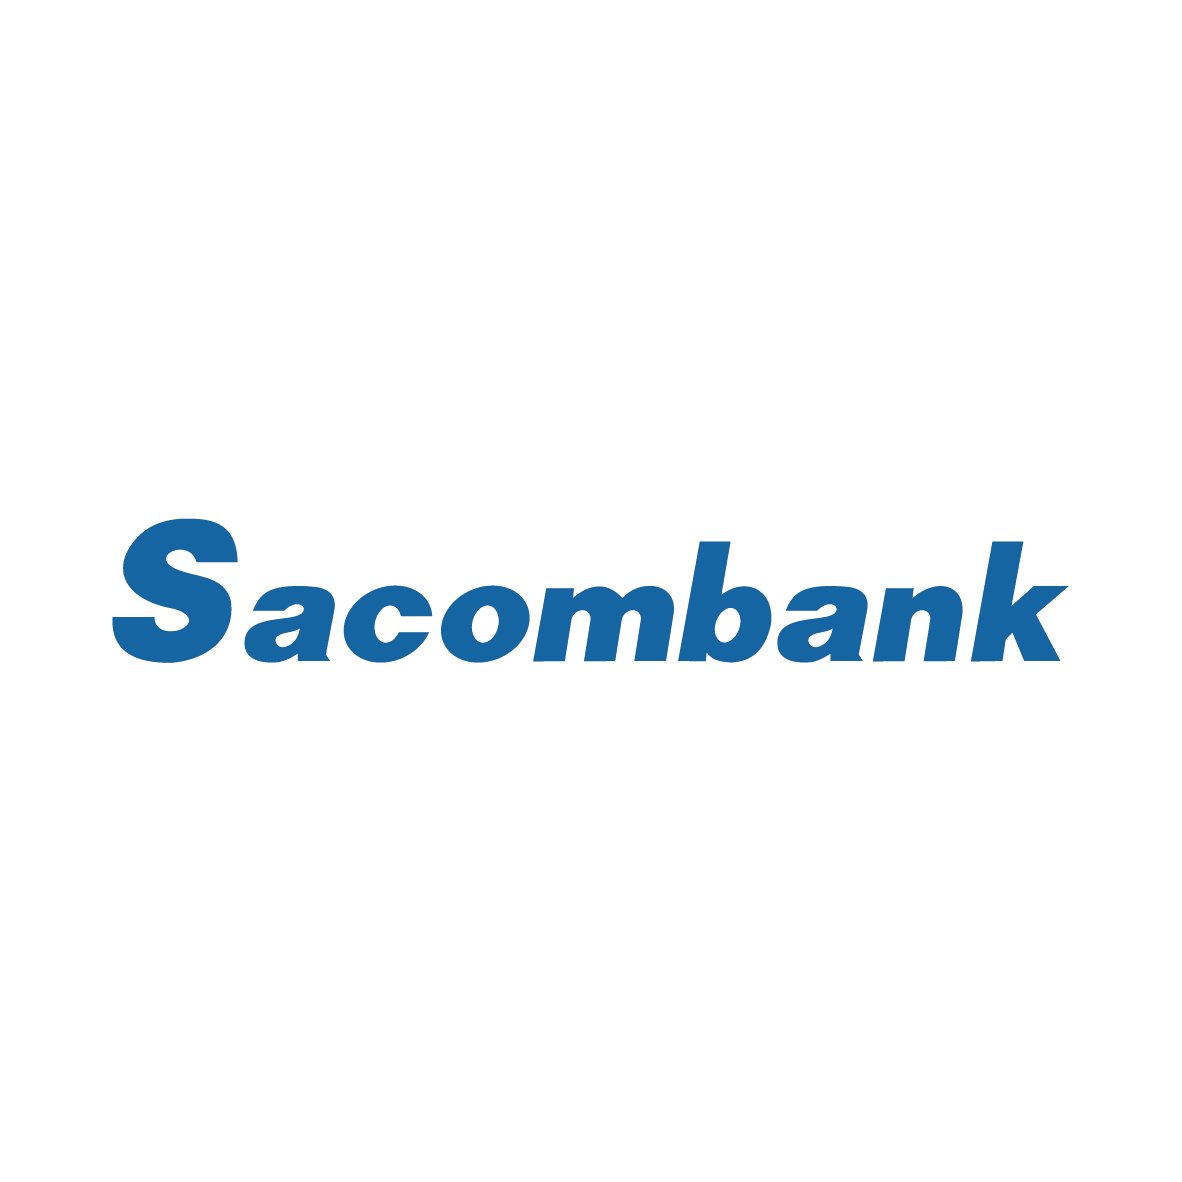 Tải logo Sacombank vector, CDR, AI, EPS, SVG, PNG, PDF miễn phí